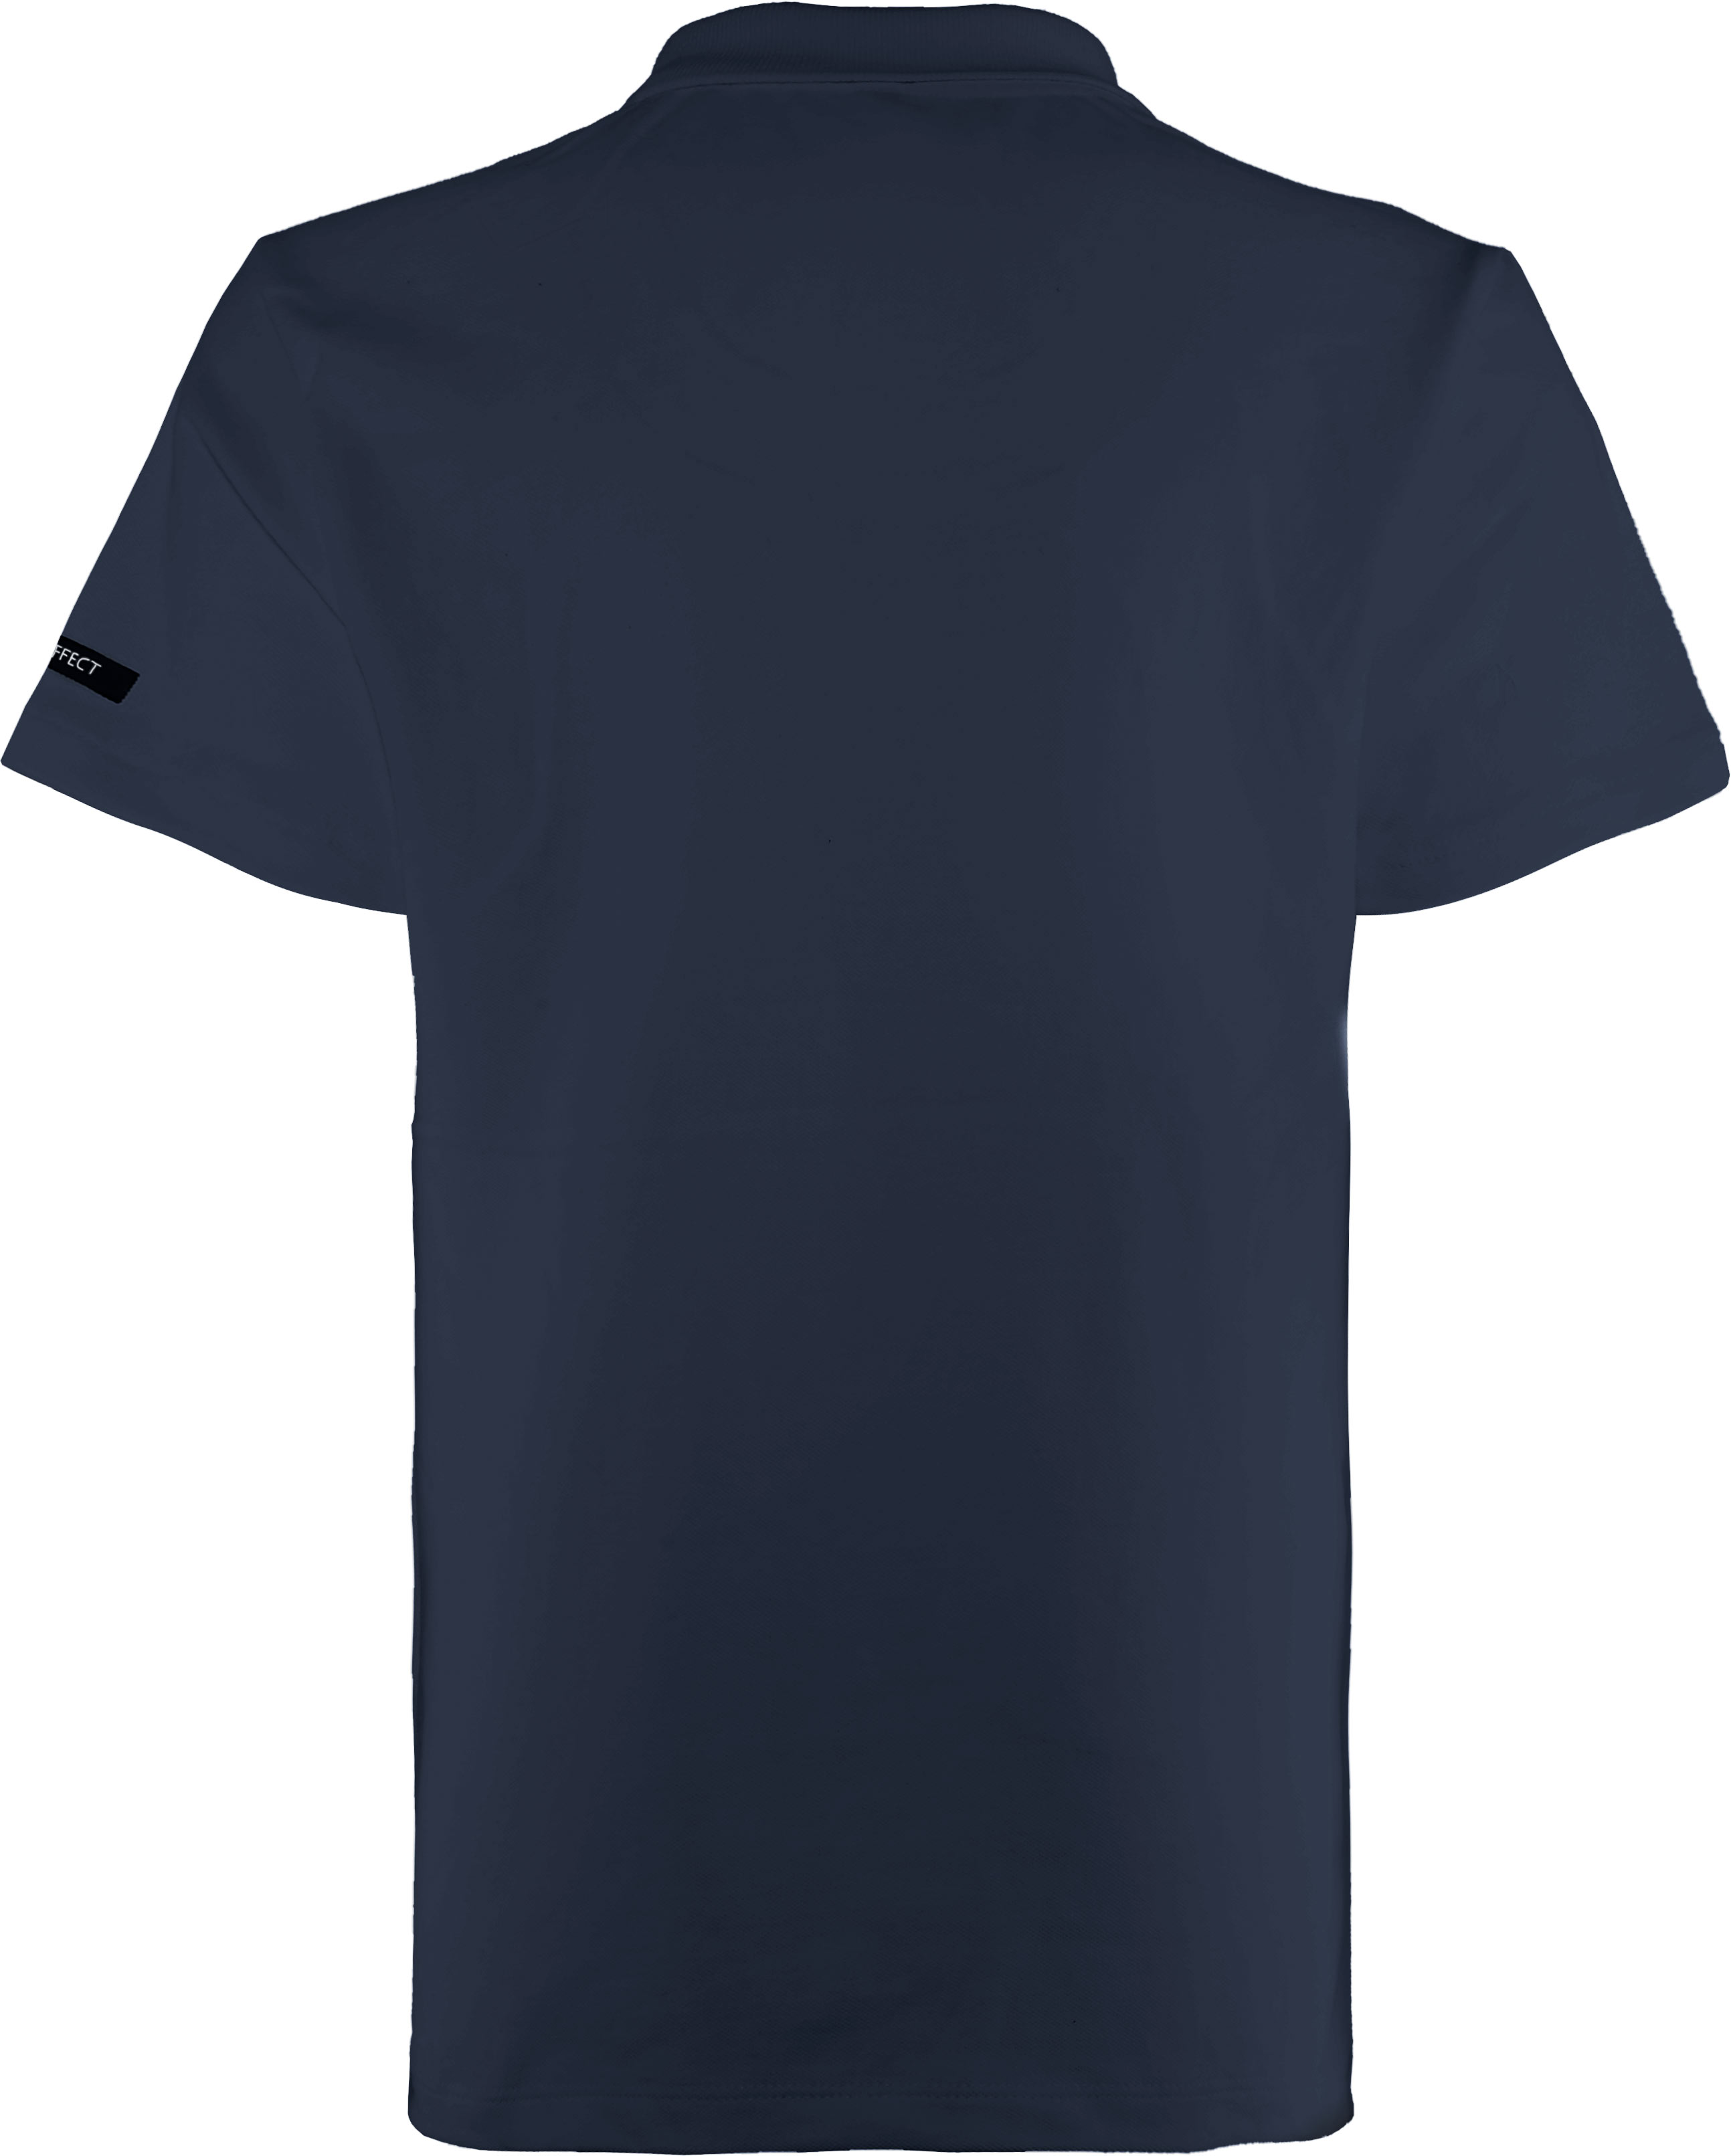 6321-Boys Polo T-Shirt